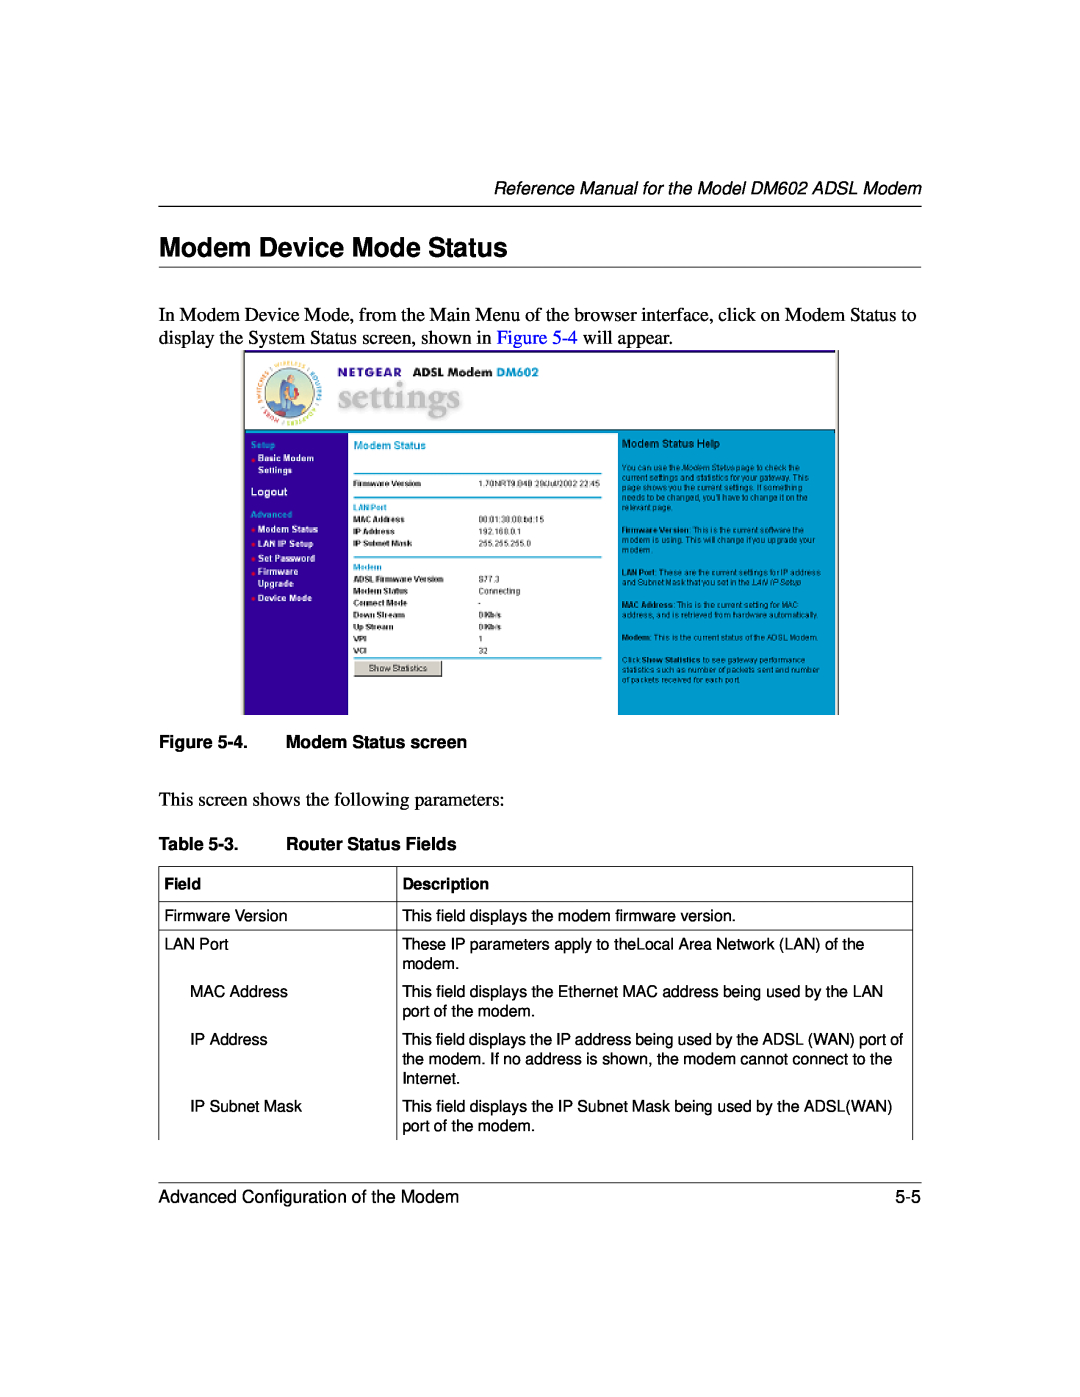 NETGEAR manual Modem Device Mode Status, Reference Manual for the Model DM602 ADSL Modem, 4. Modem Status screen 